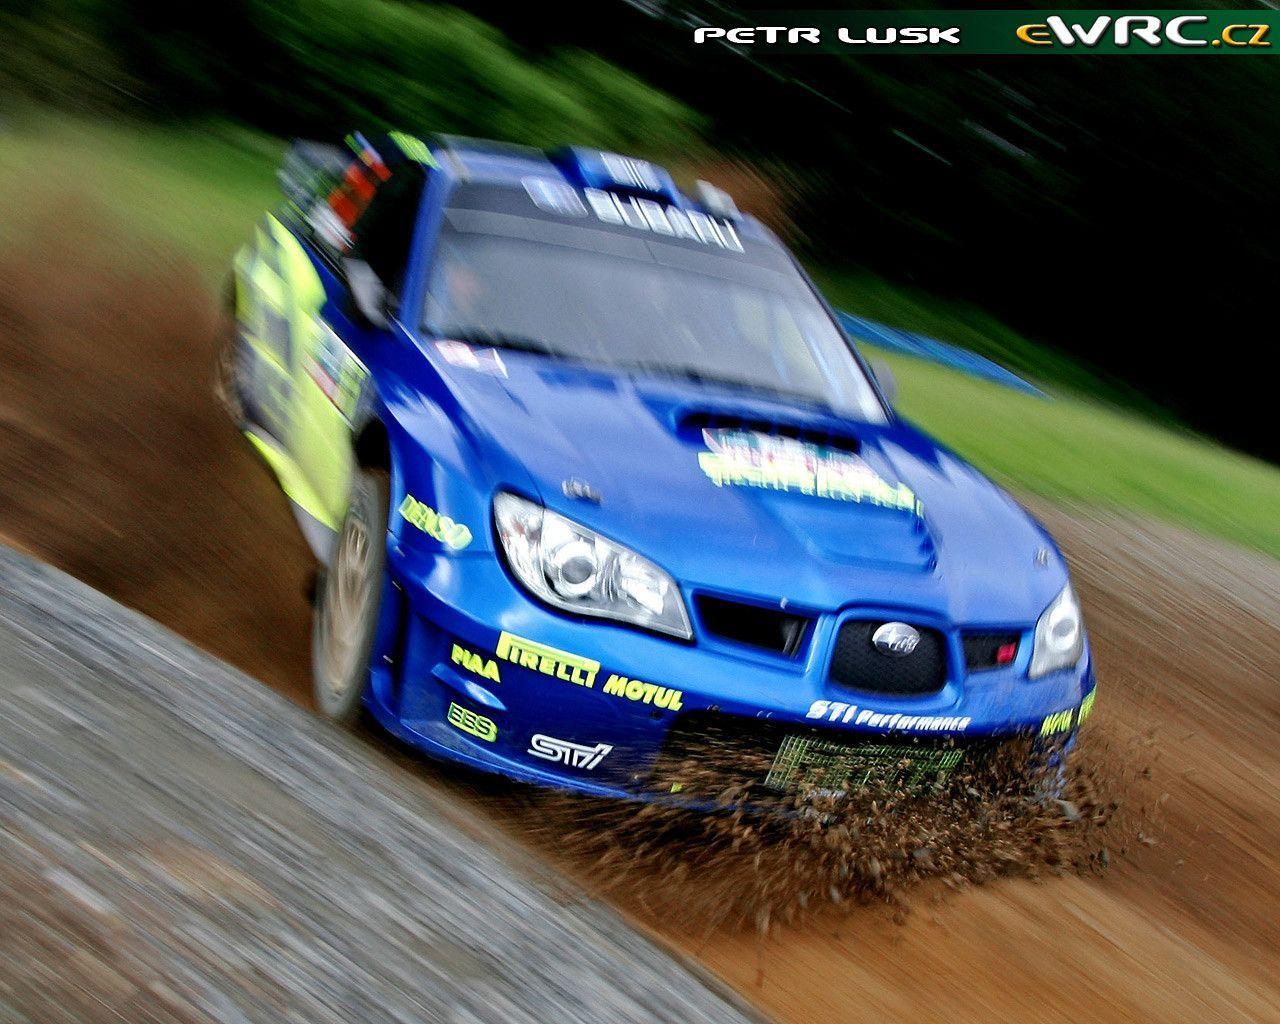 Download wallpaper: rally car Wallpaper, download photo, Rally car